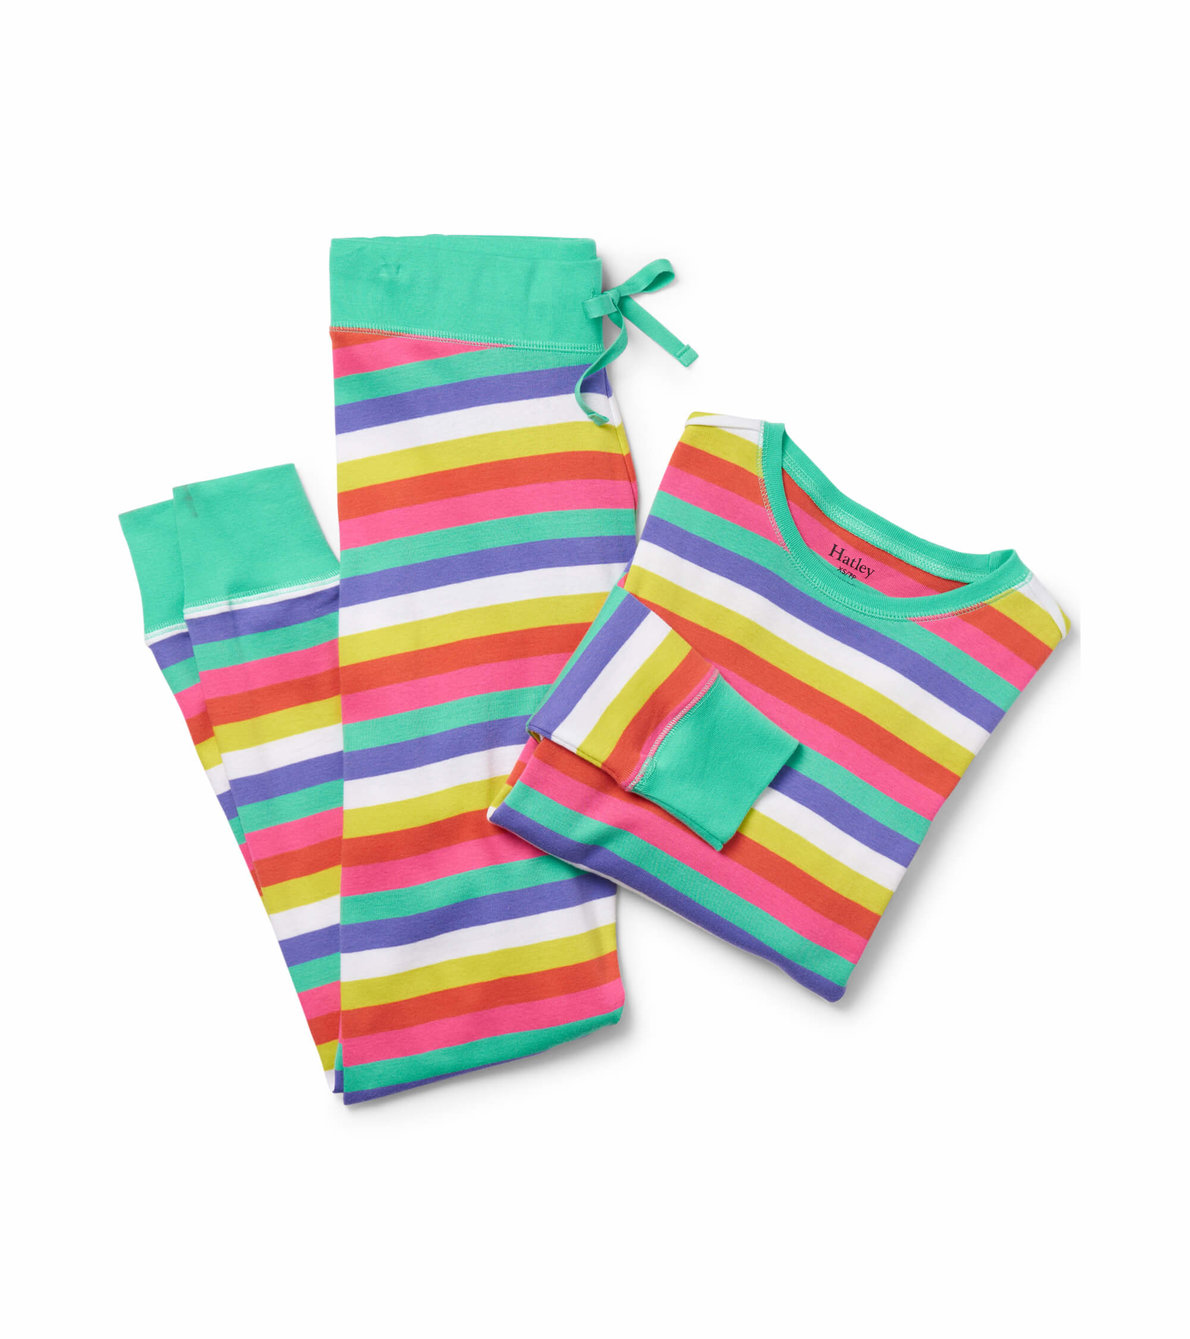 View larger image of Rainbow Stripes Organic Cotton Women's Pajama Set